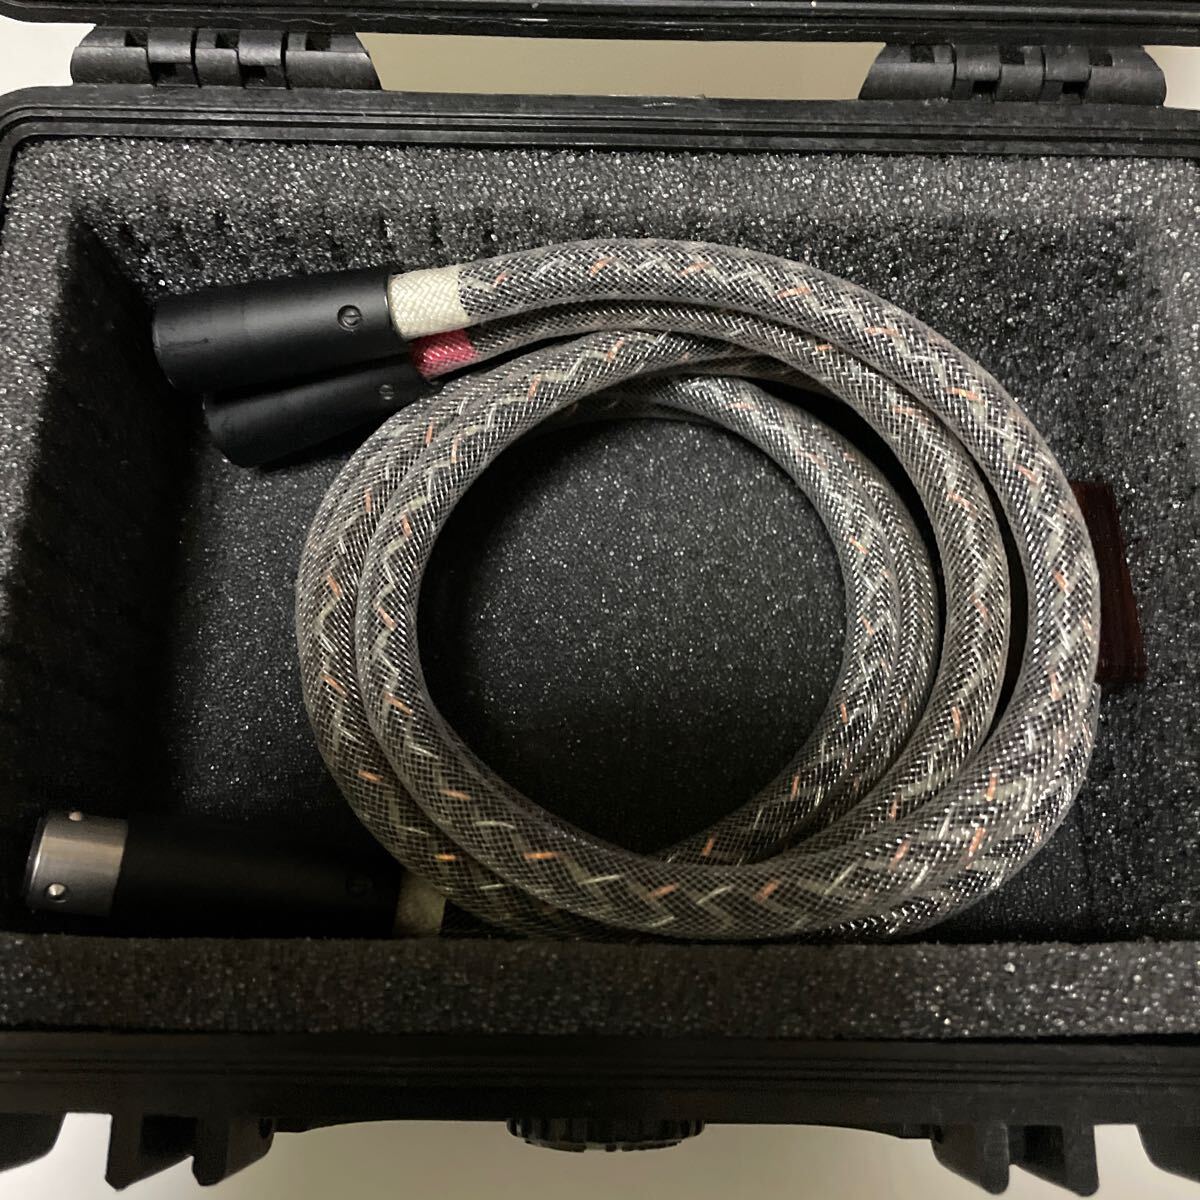 KIMBERKABLE |XLR кабель | серебряный линия & медь линия (KS1020 )1,5m WBT-0108 XLR кабель 